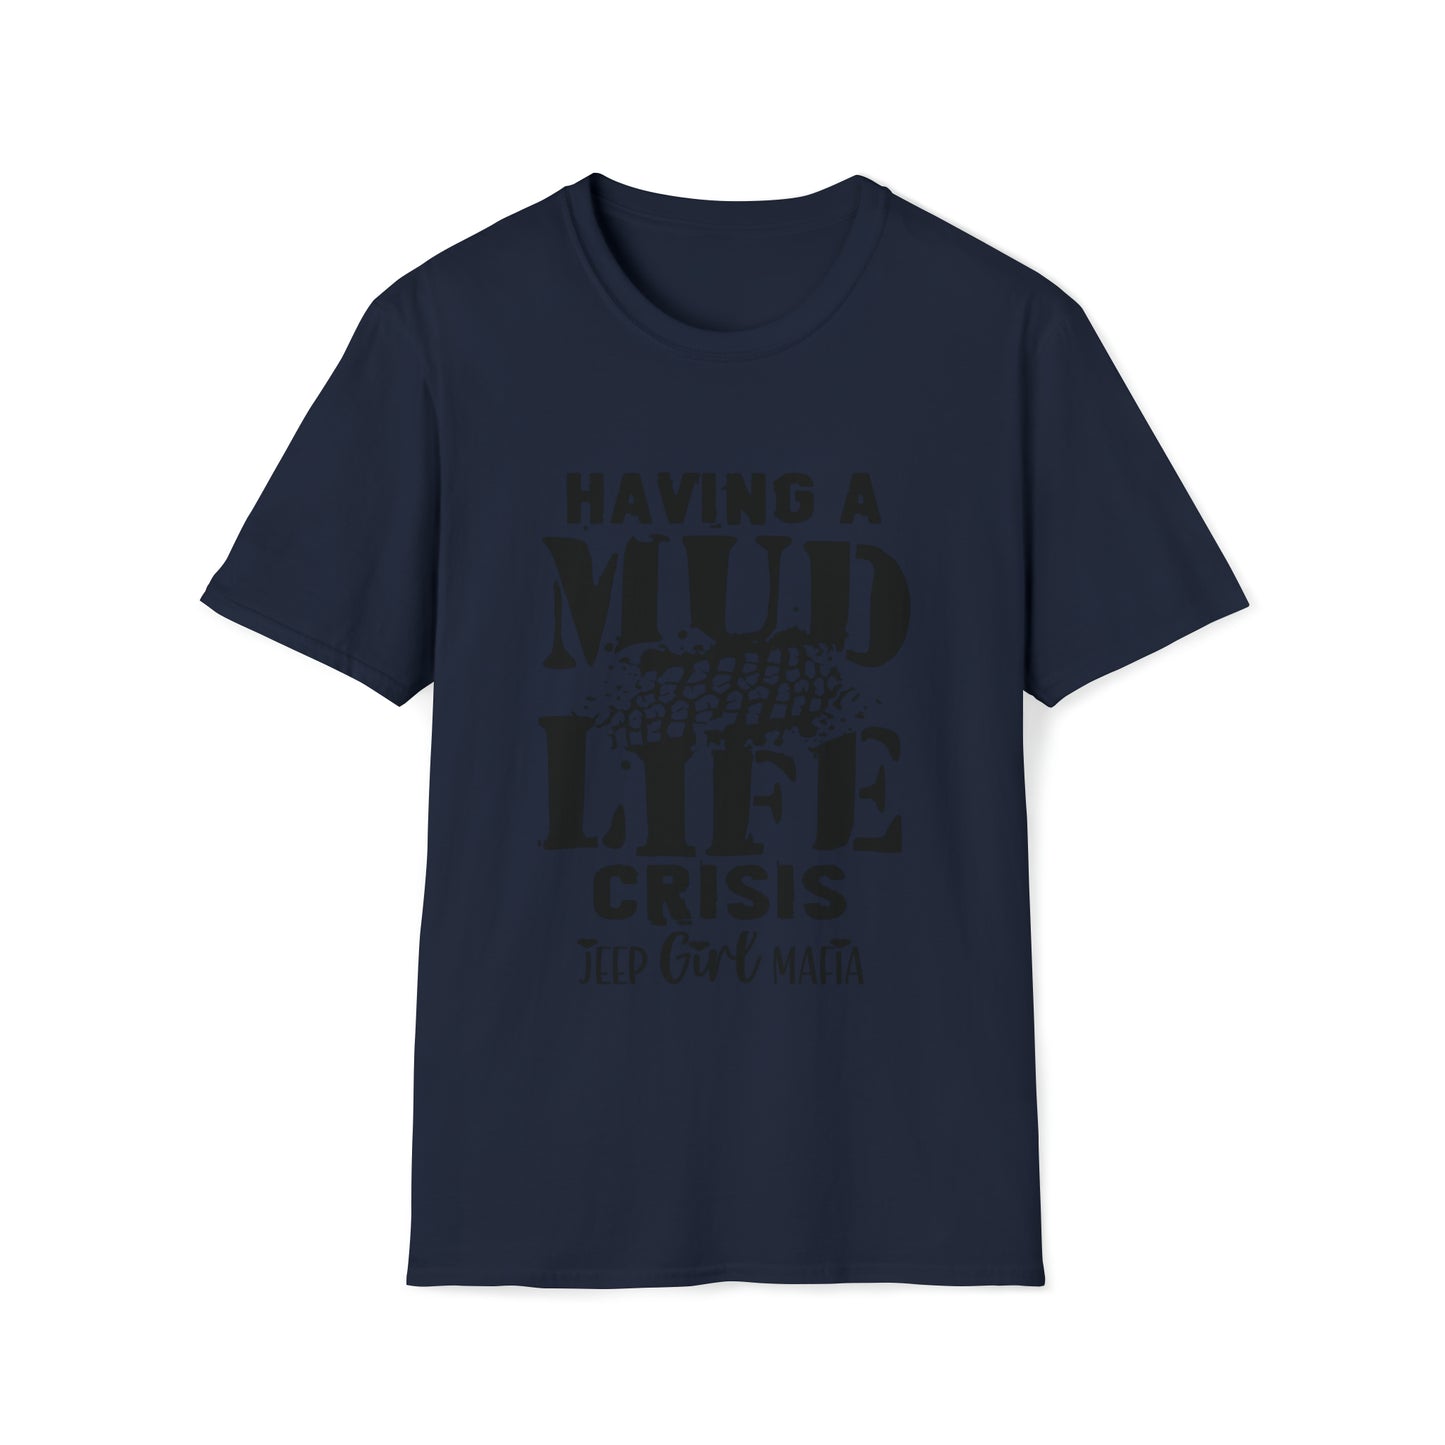 Having a Mud Life Crisis - JGM | Unisex T-Shirt